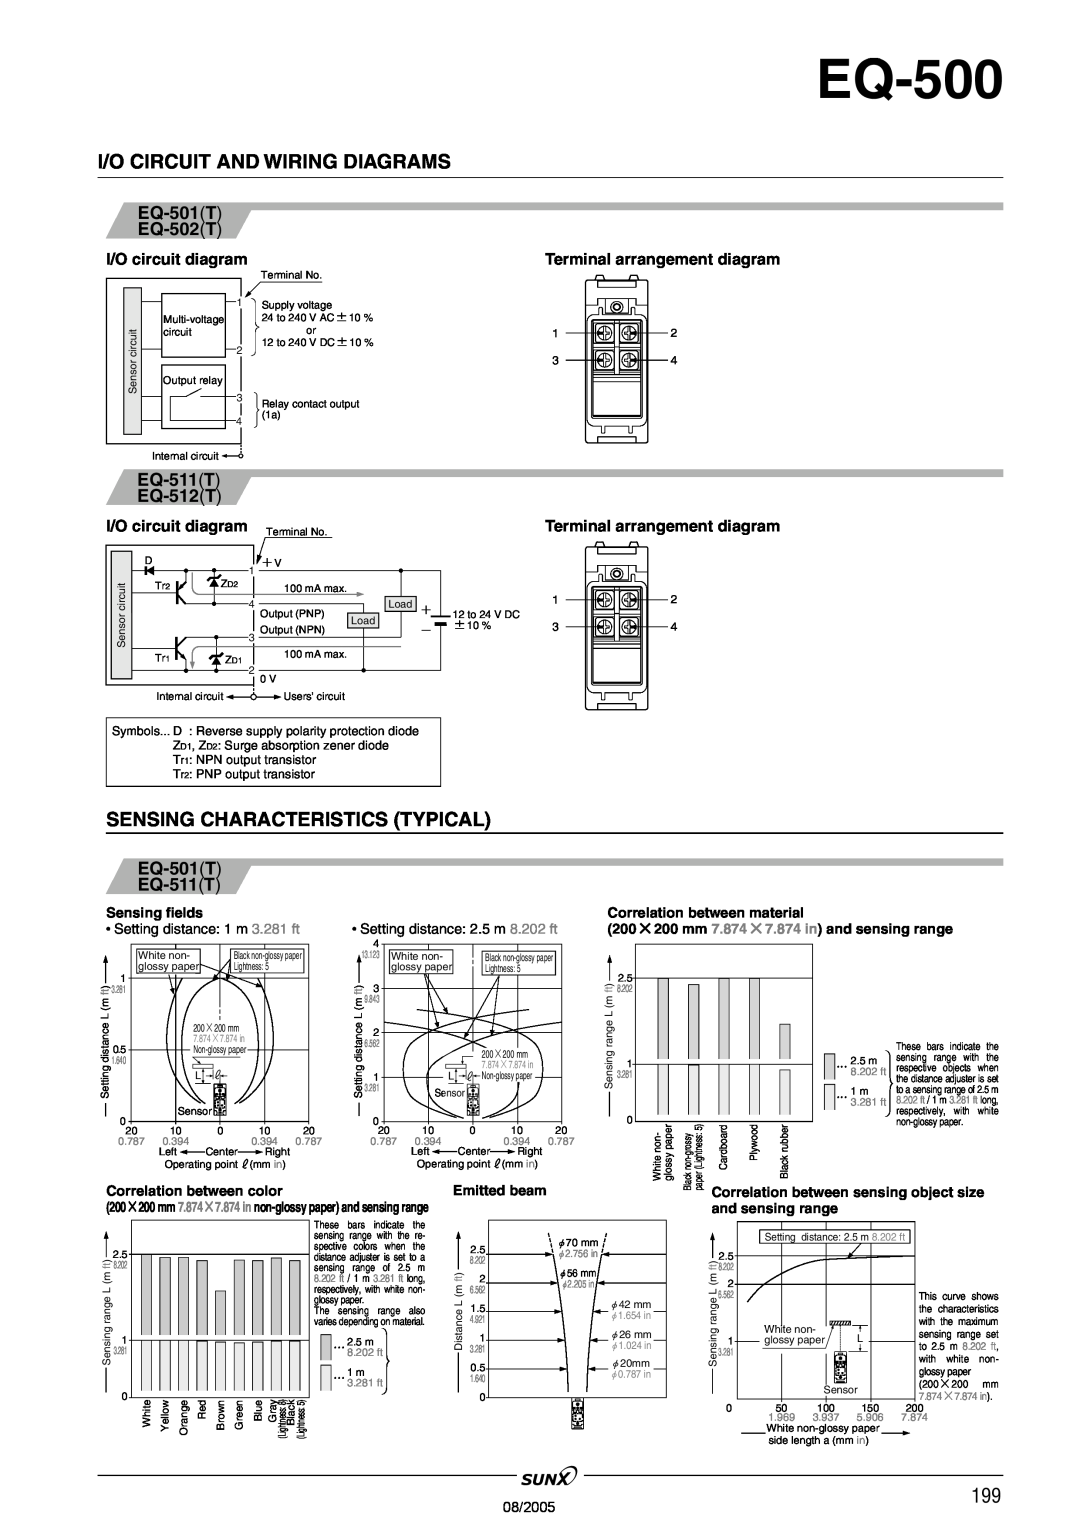 Panasonic EQ-500 Series I/O Circuit And Wiring Diagrams, Sensing Characteristics Typical, EQ-501T EQ-502T, EQ-511T EQ-512T 